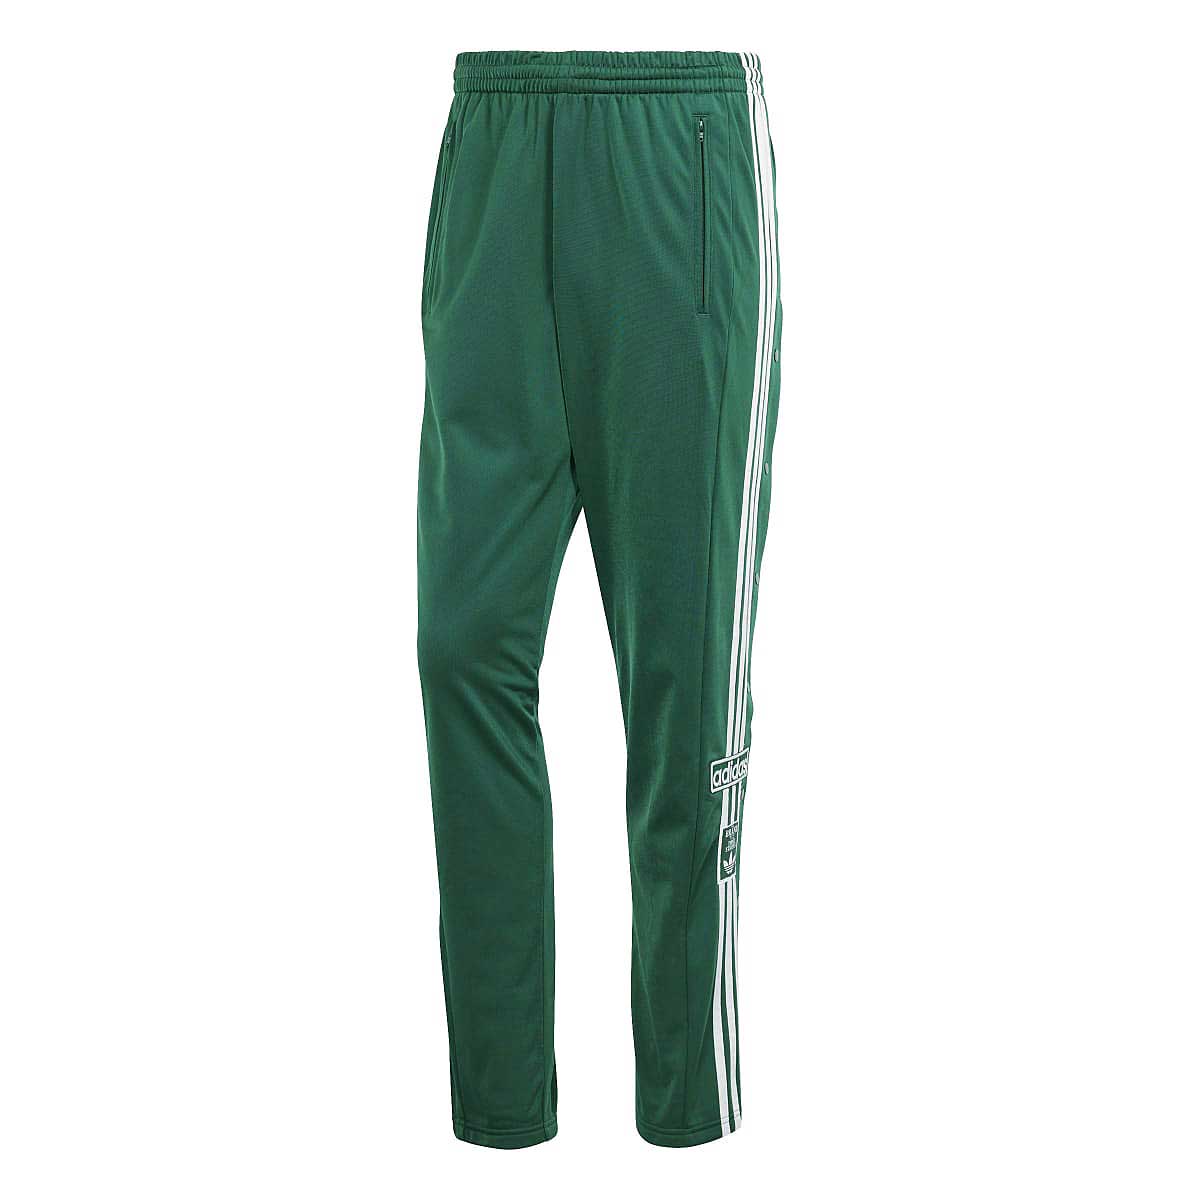 Adidas Adibreak Pants, Green M